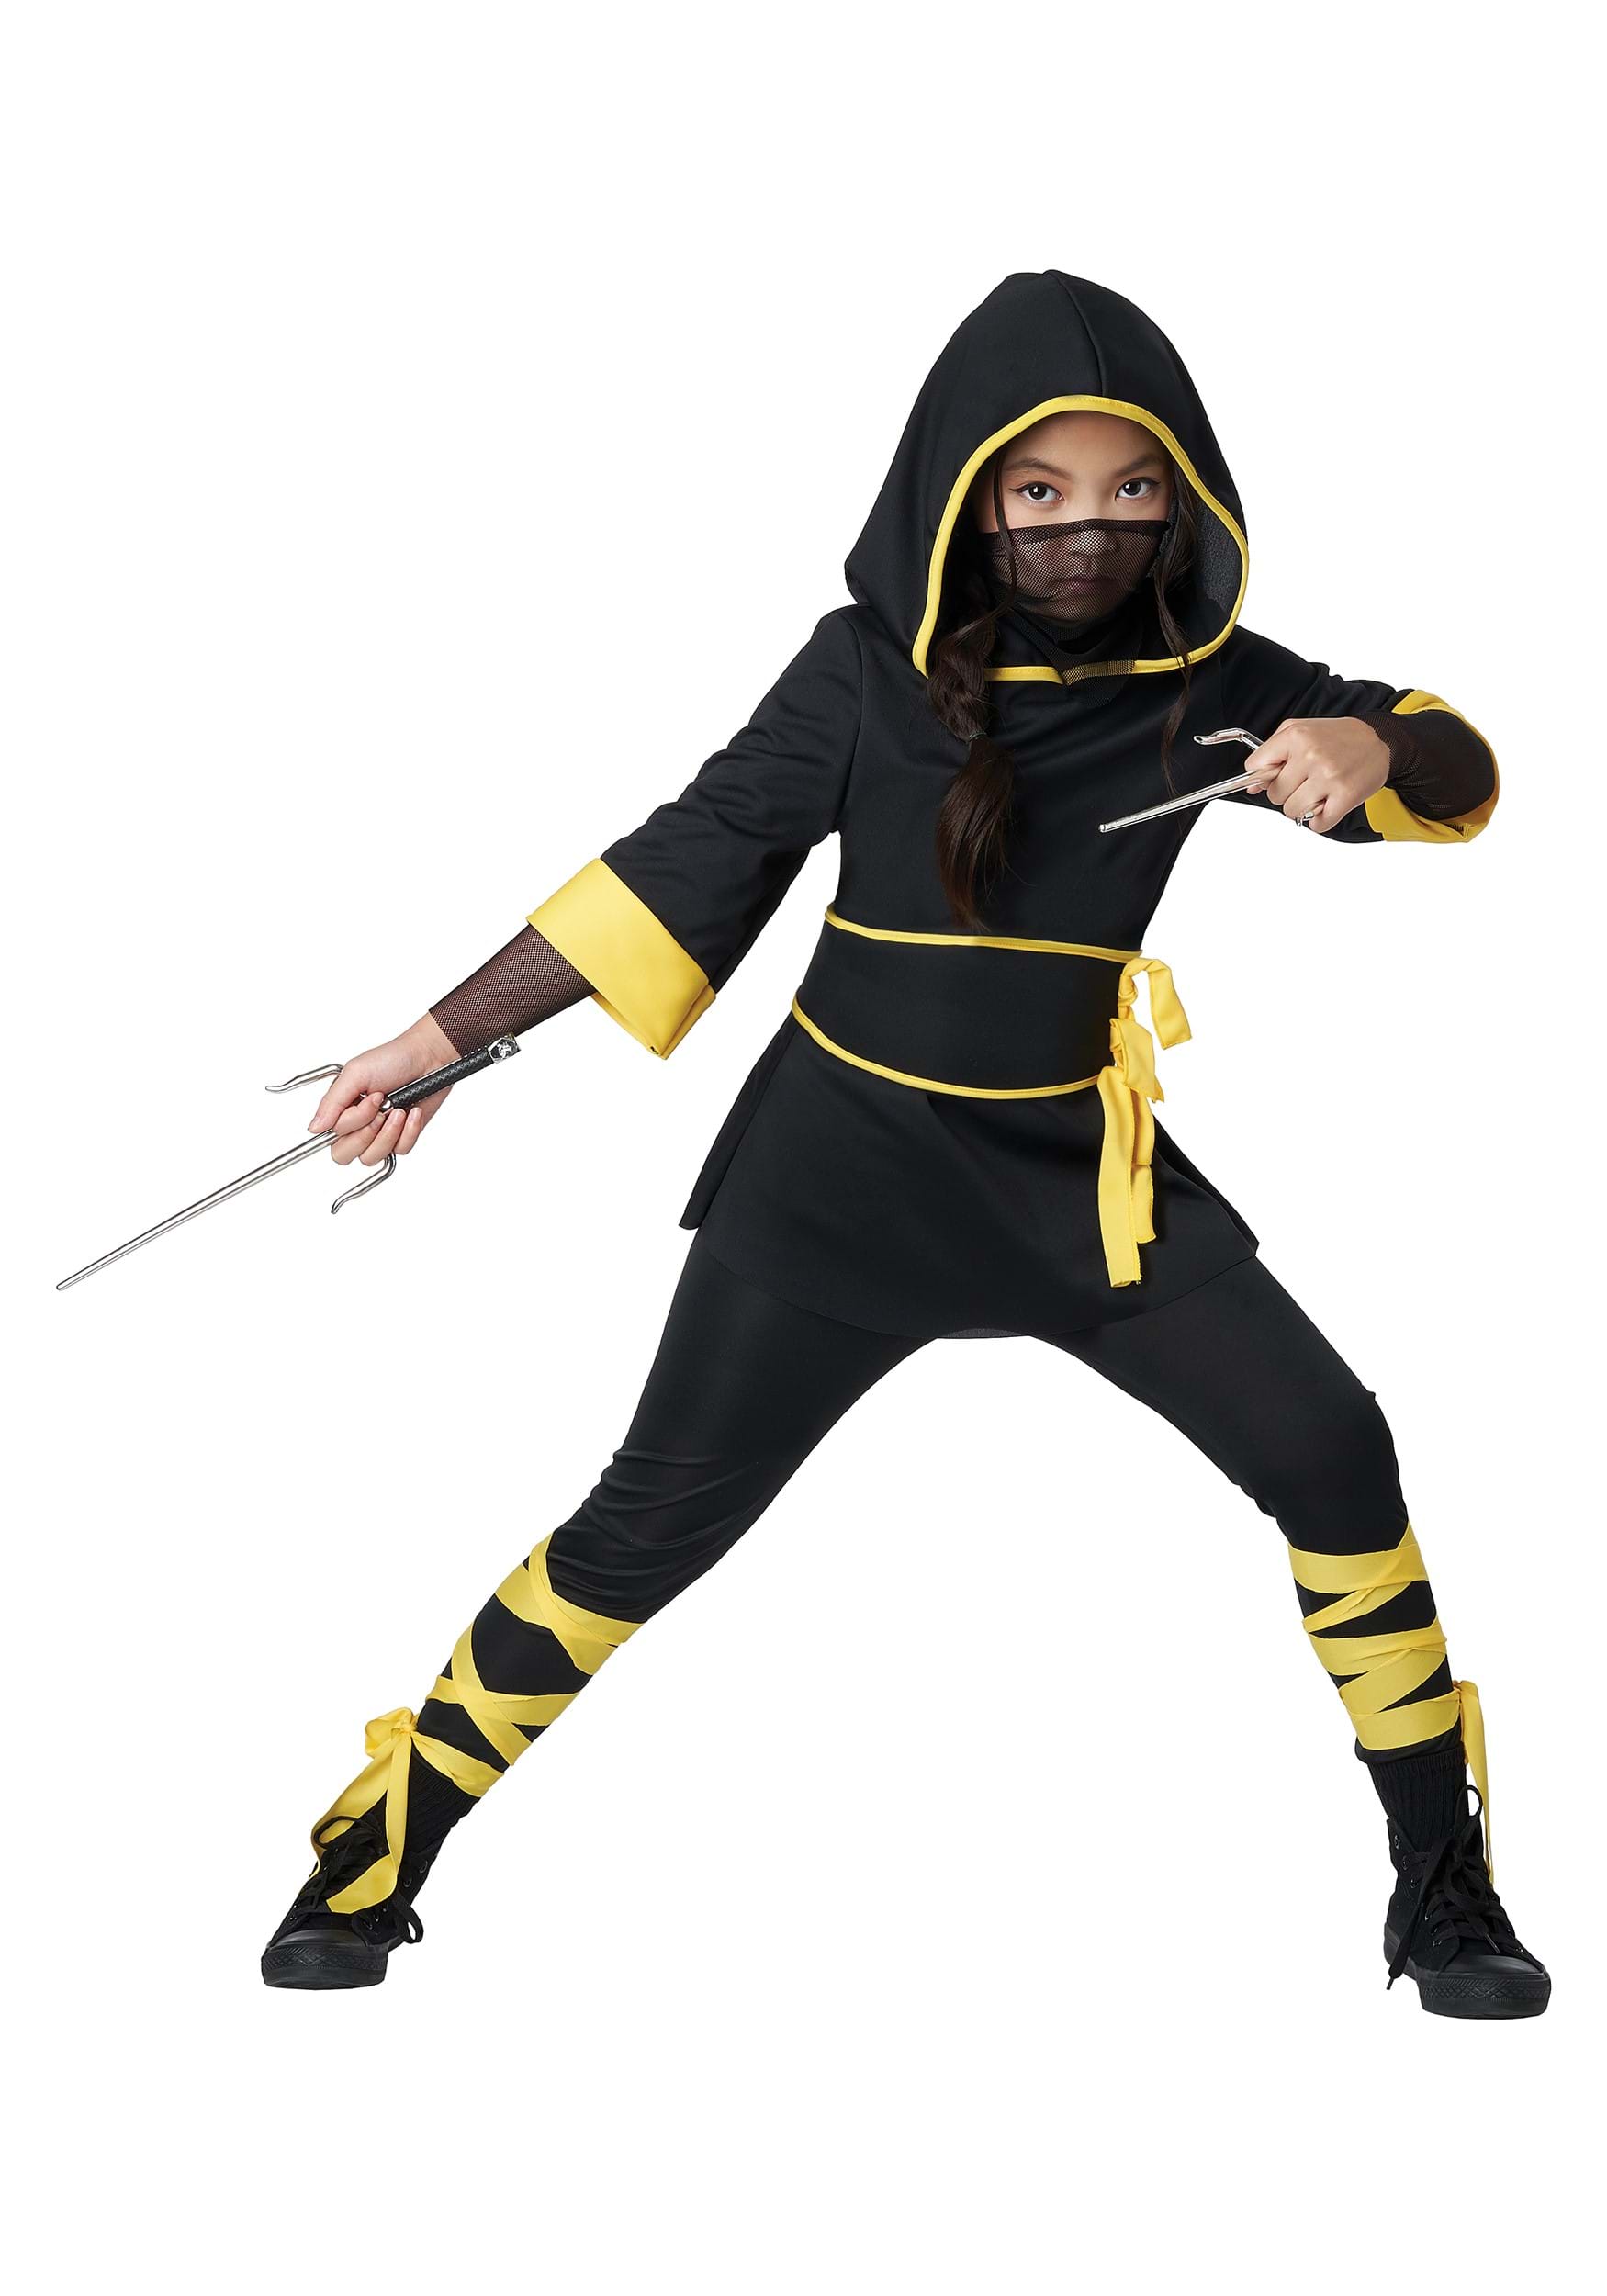 https://images.fun.com/products/73244/1-1/girls-lightning-ninja-costume.jpg